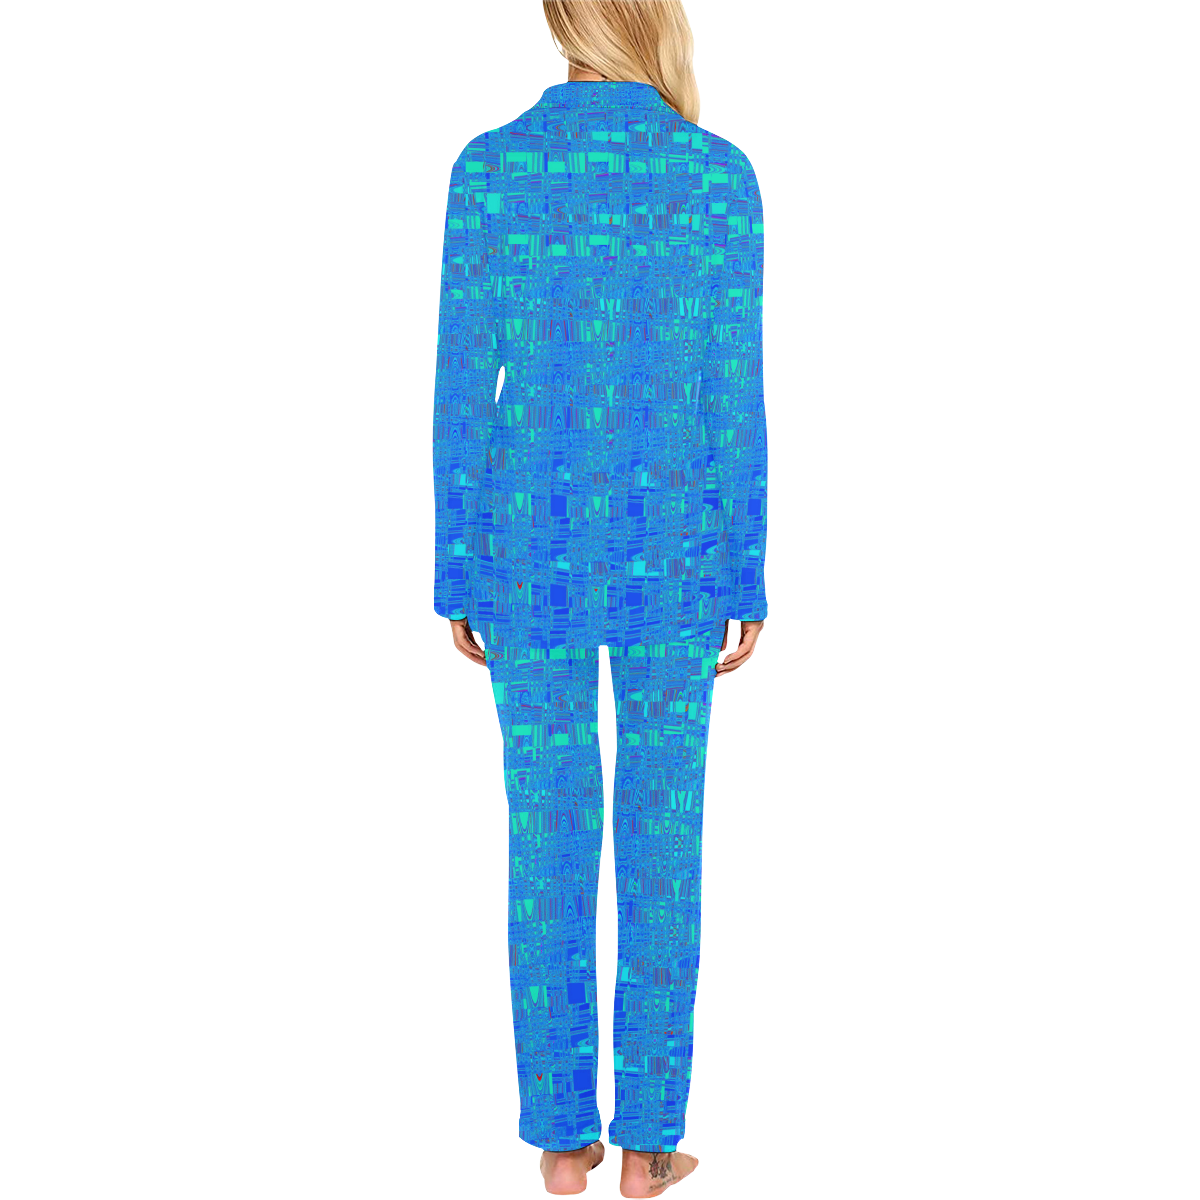 Frozen bliss Women's Long Pajama Set